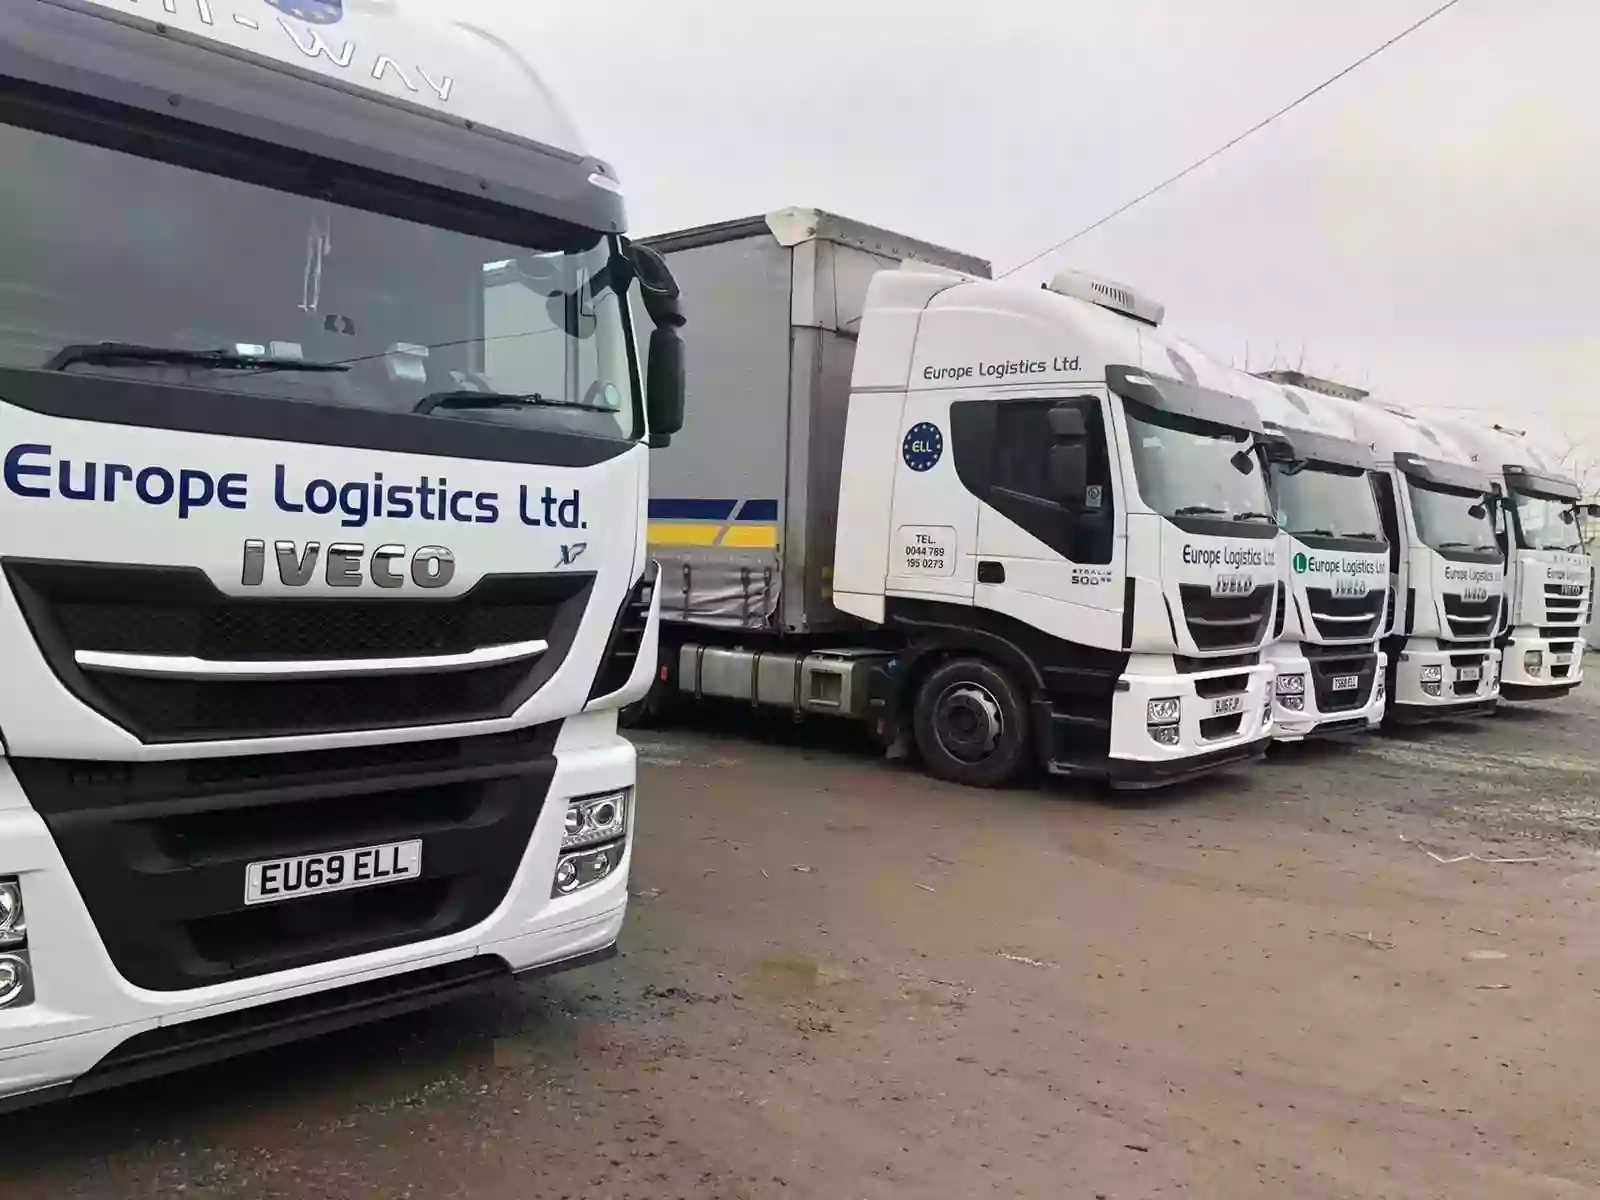 Europe Logistics Ltd